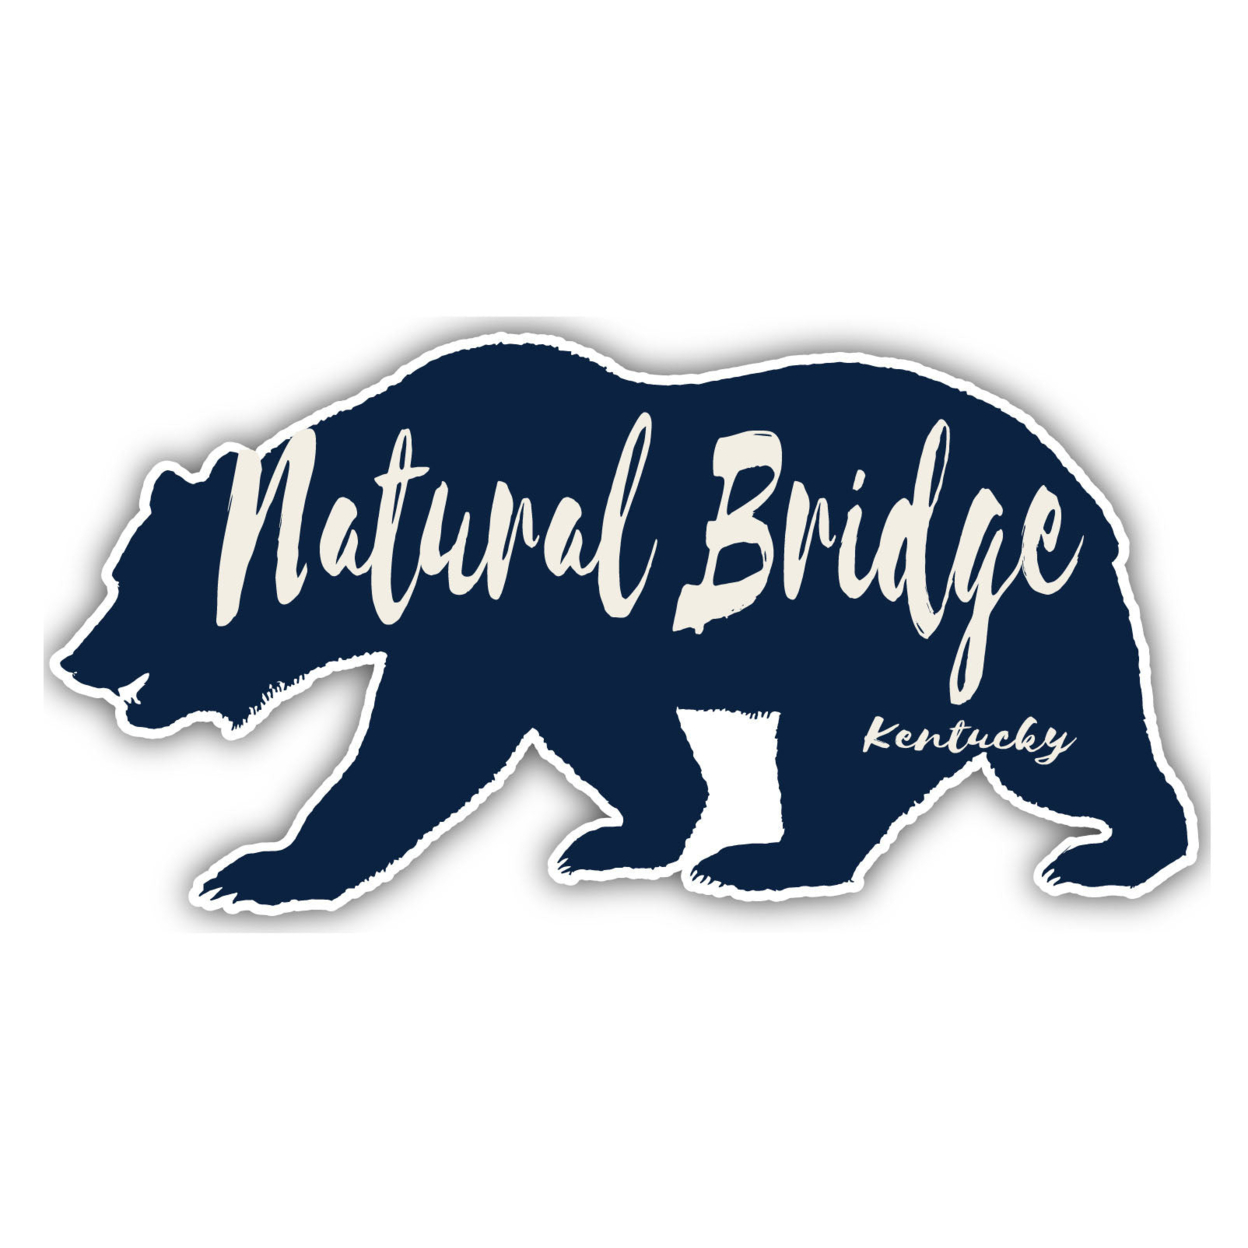 Natural Bridge Kentucky Souvenir Decorative Stickers (Choose Theme And Size) - Single Unit, 4-Inch, Bear